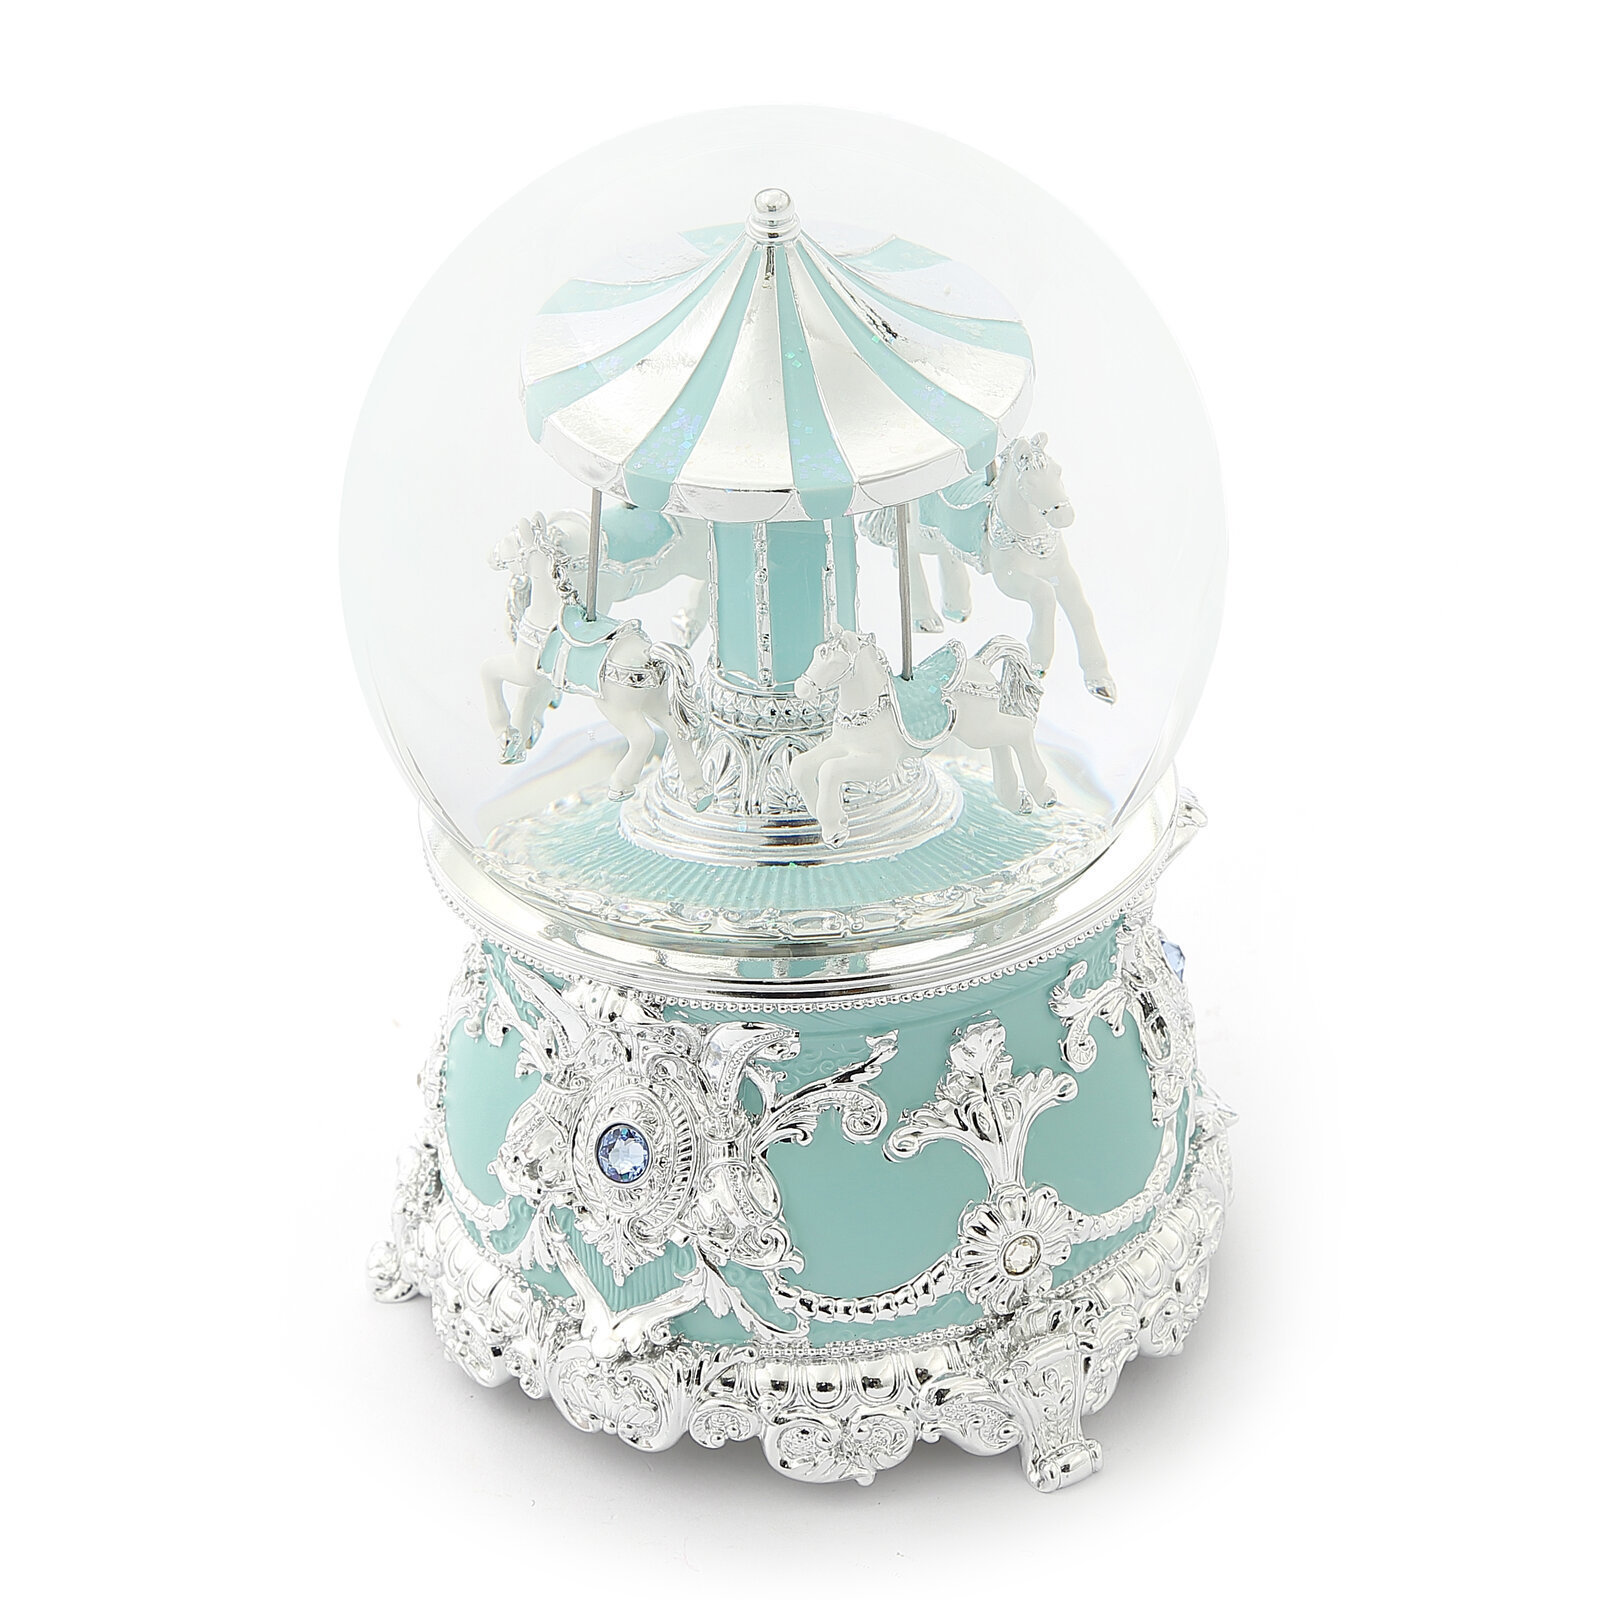 Tiffany & Co, Stunning Carousel Musical Globe